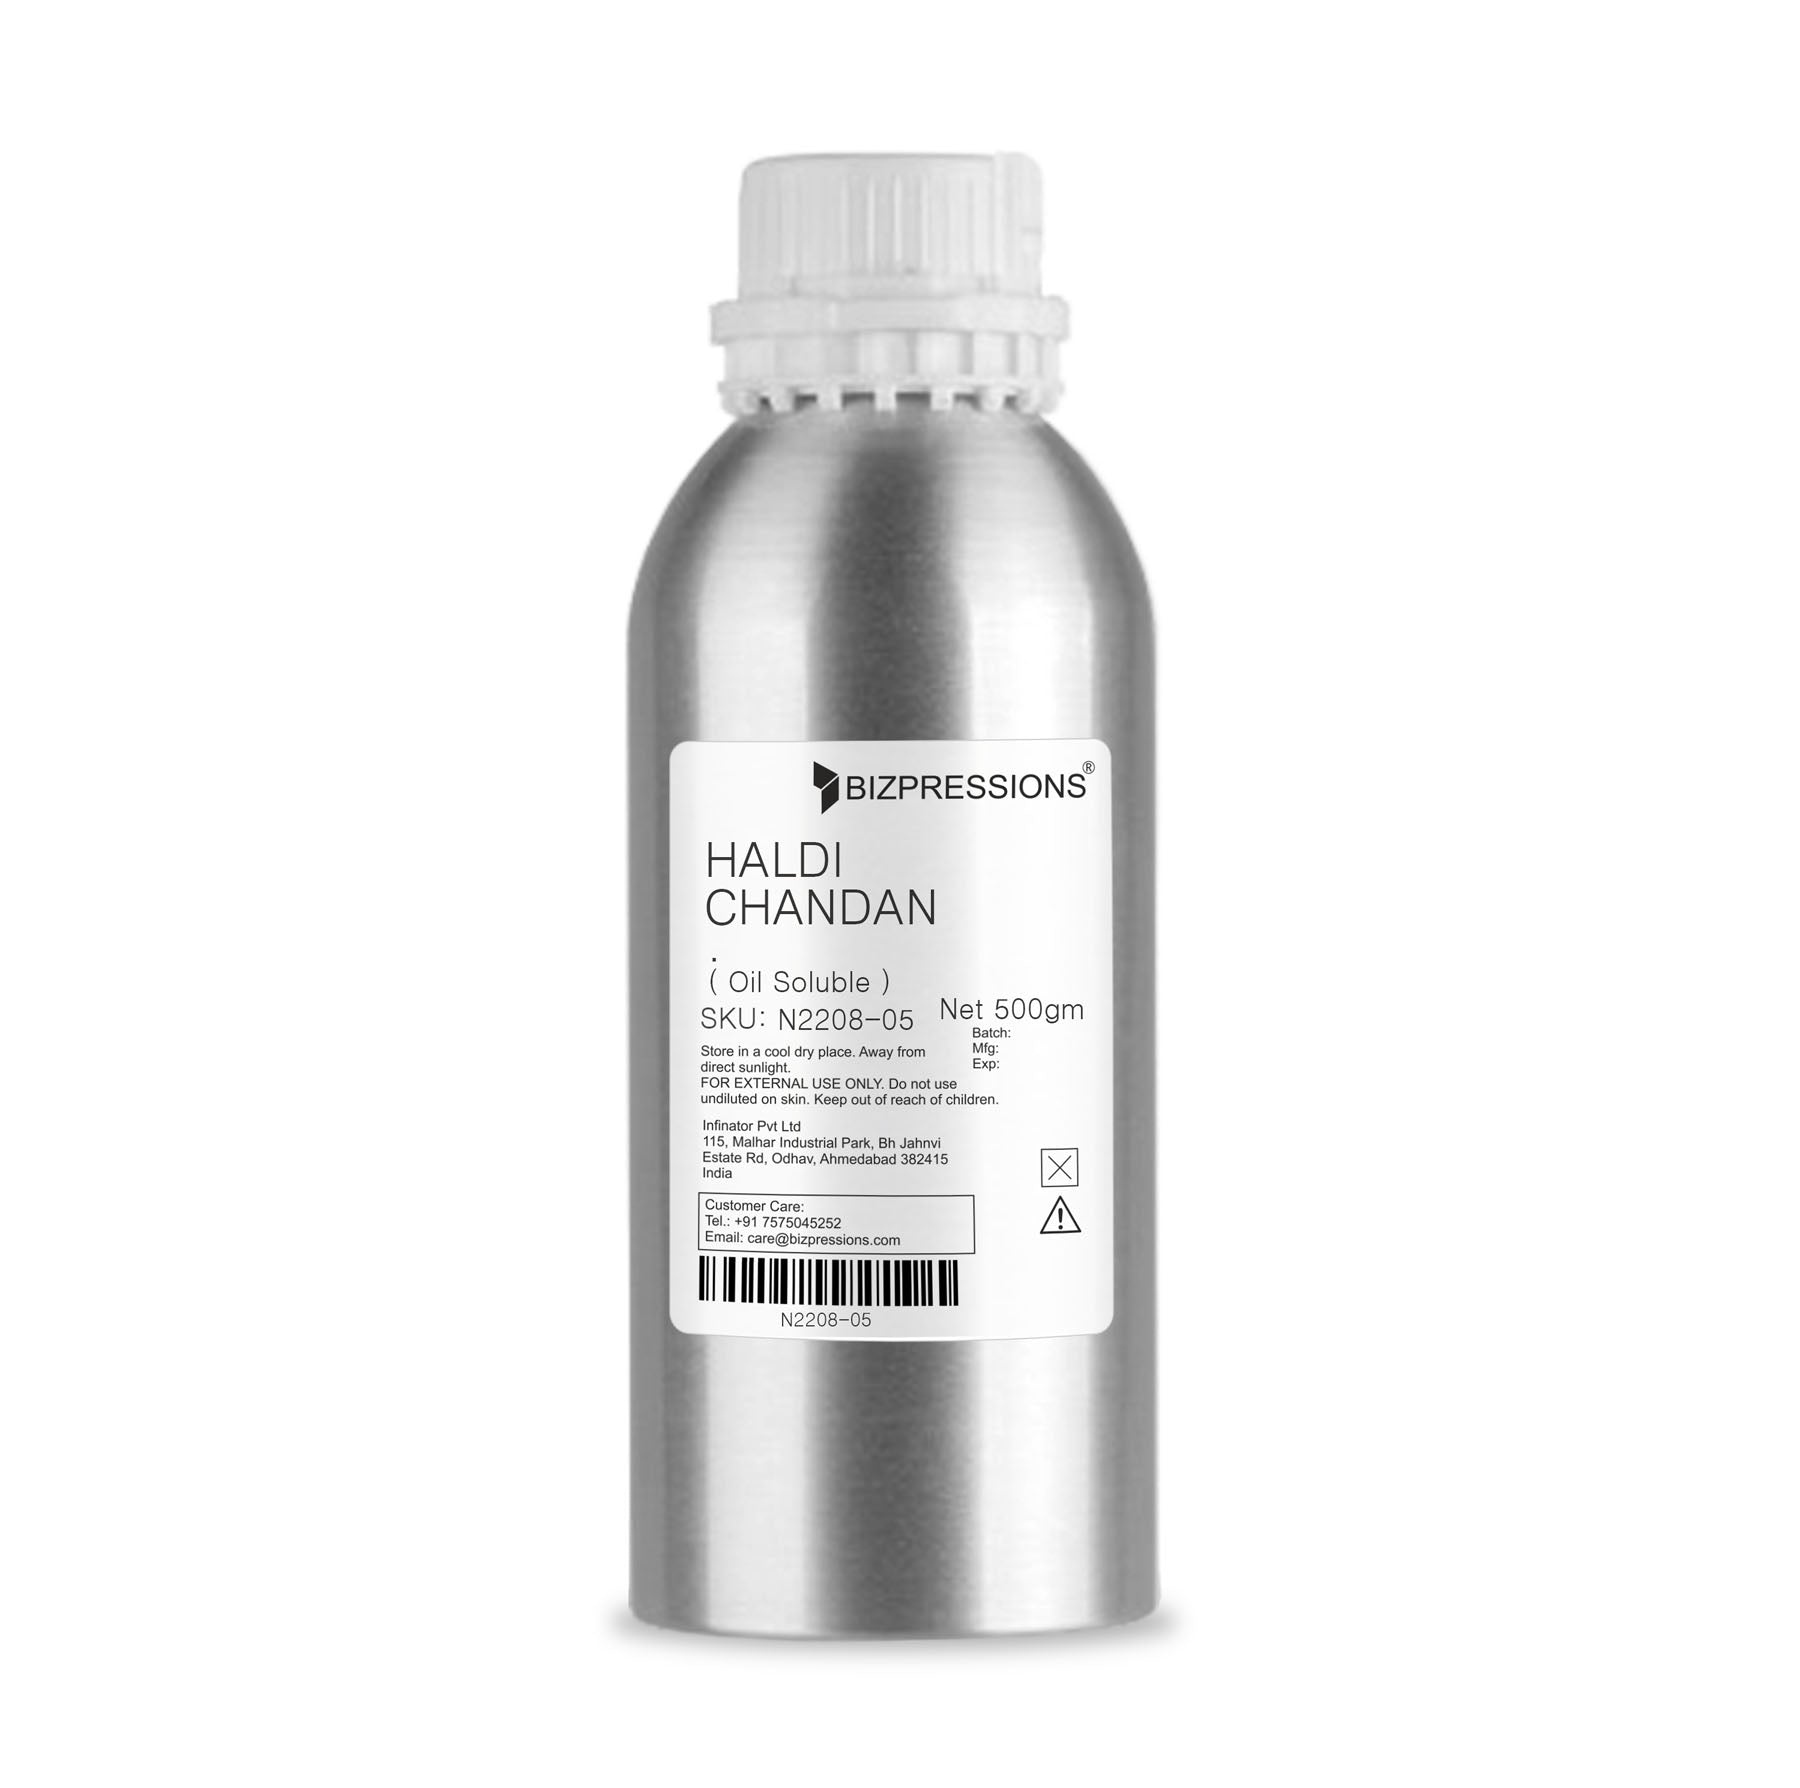 HALDI CHANDAN - Fragrance ( Oil Soluble ) - 500 gm